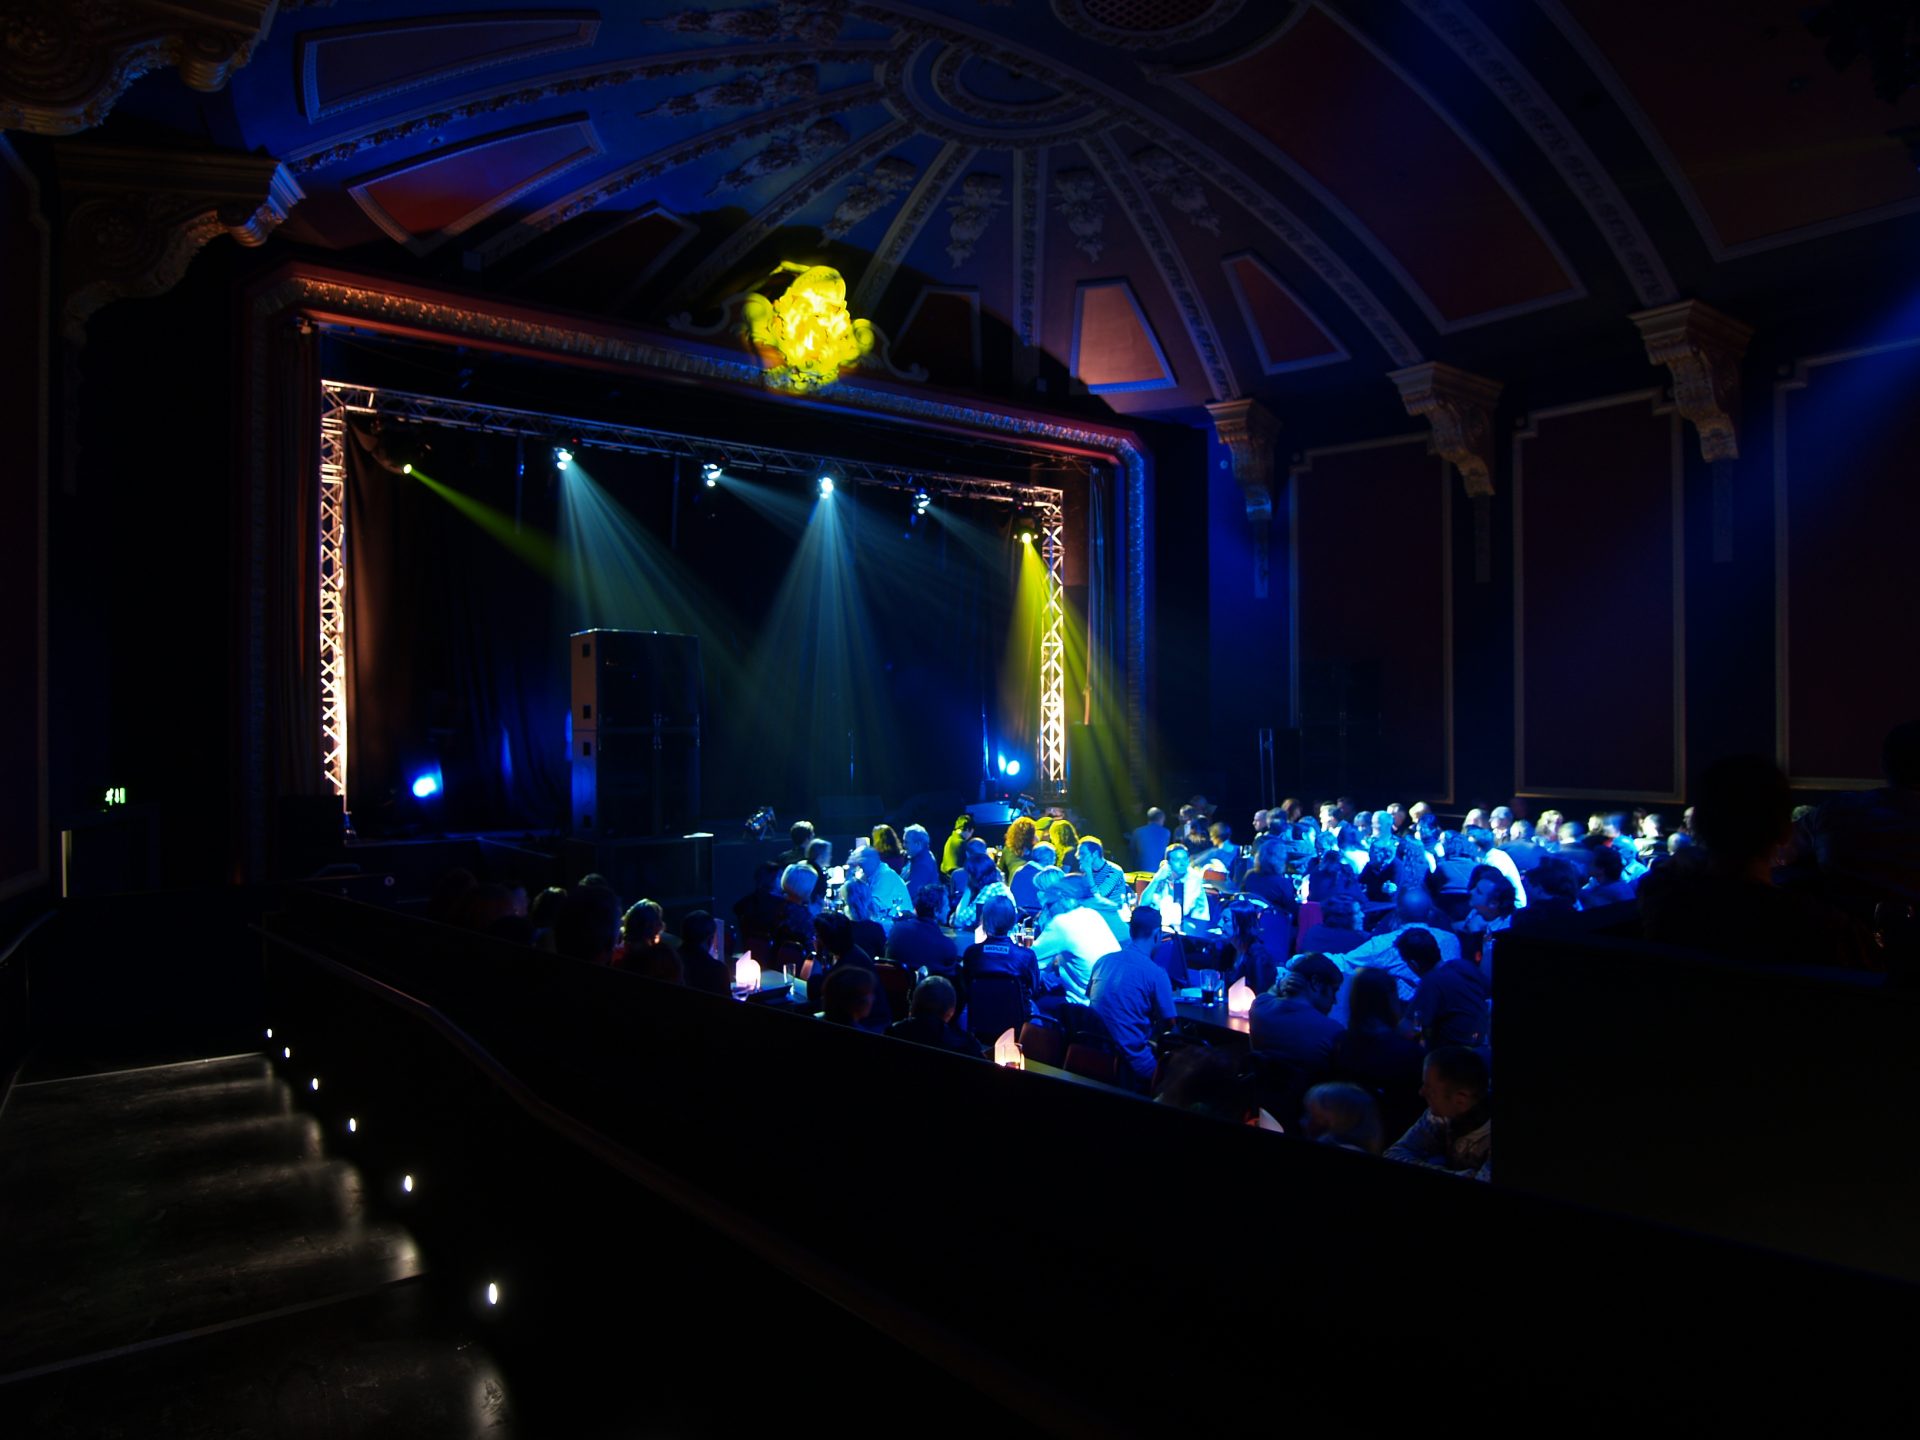 Komedia Bath Comedy Club Auditorium Lighting